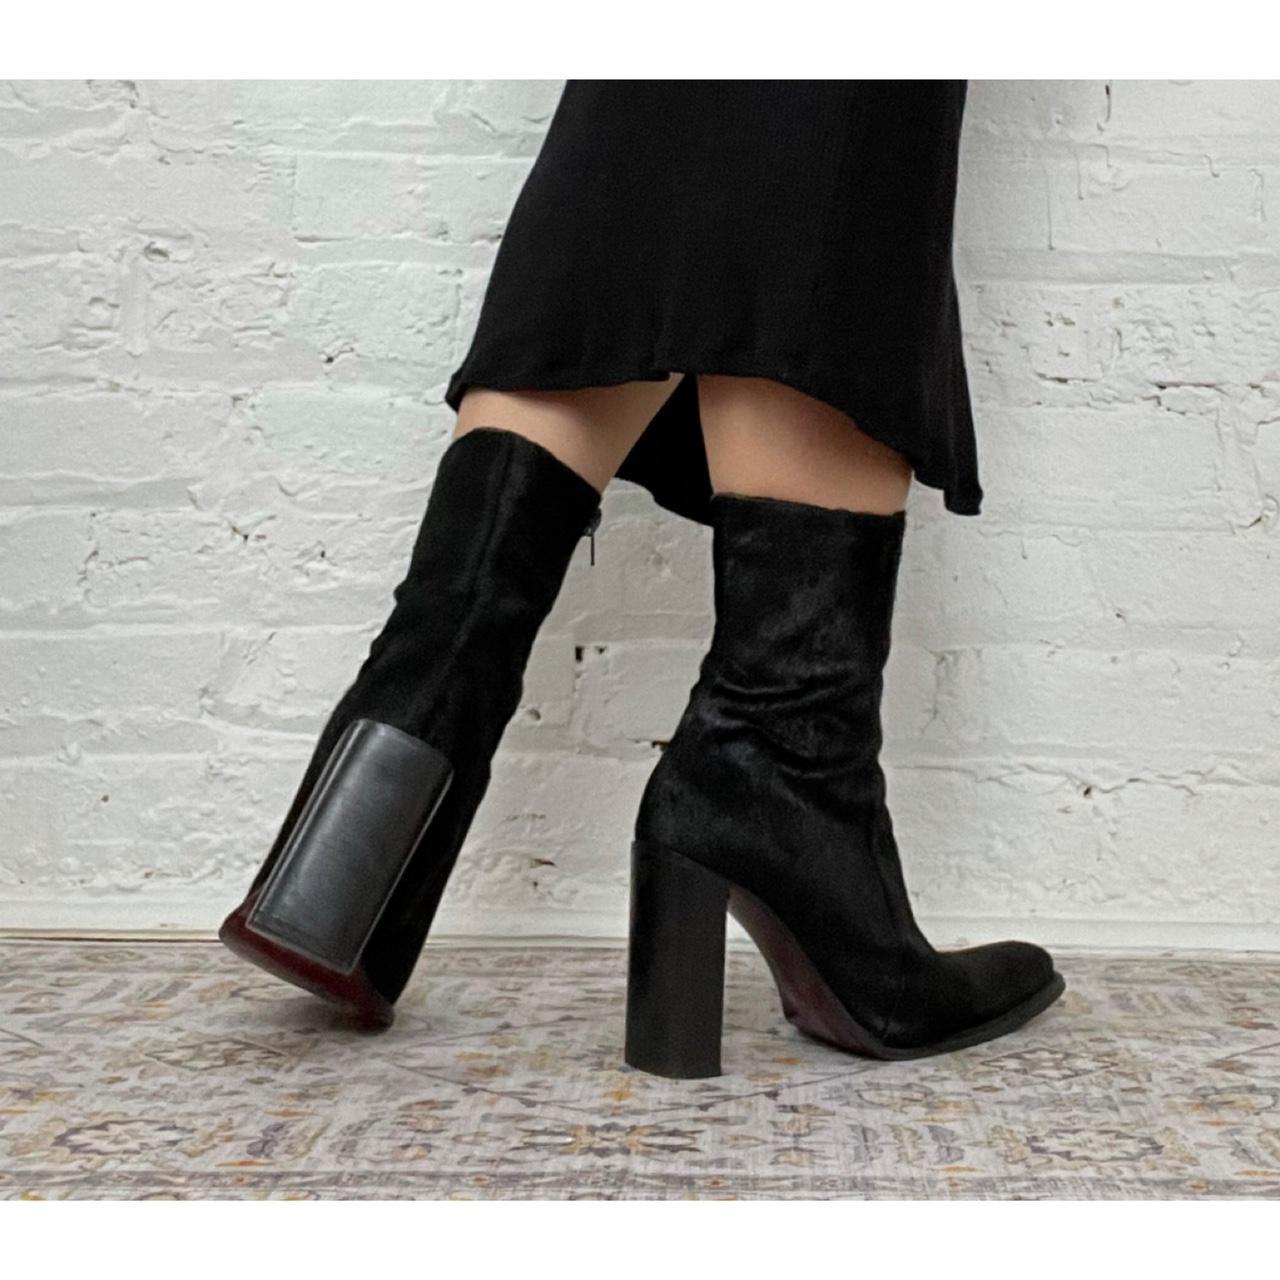 Zara Women's Black Boots (2)